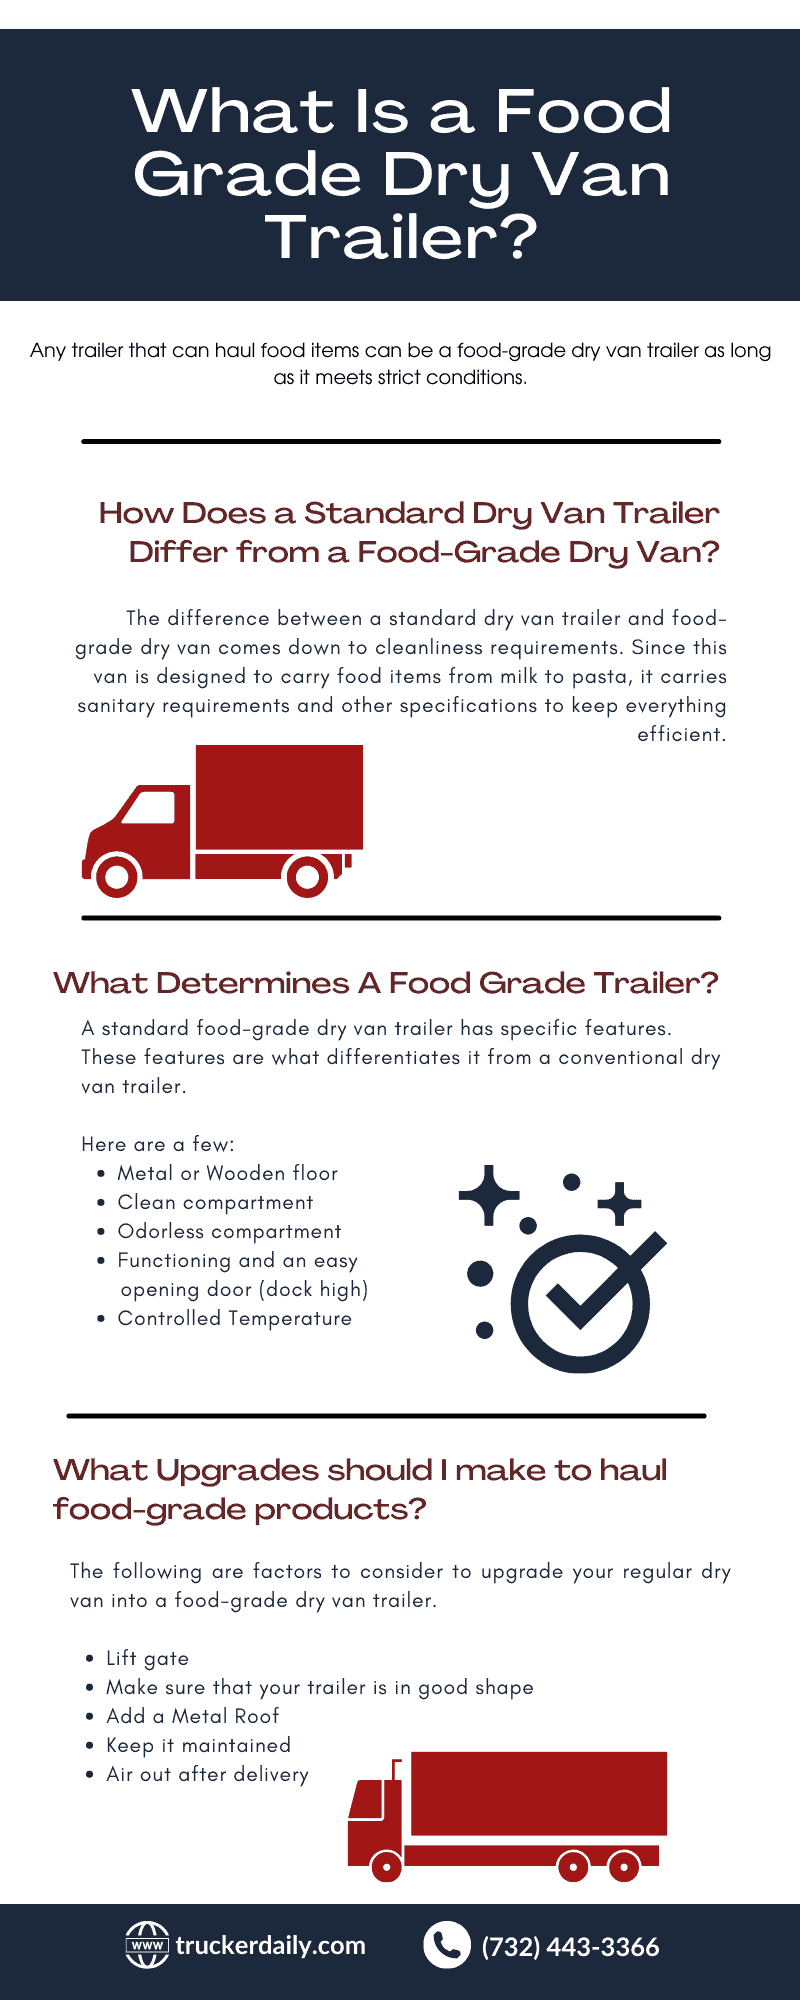 Truck Drivers for Food-Grade Dry Van Trailer